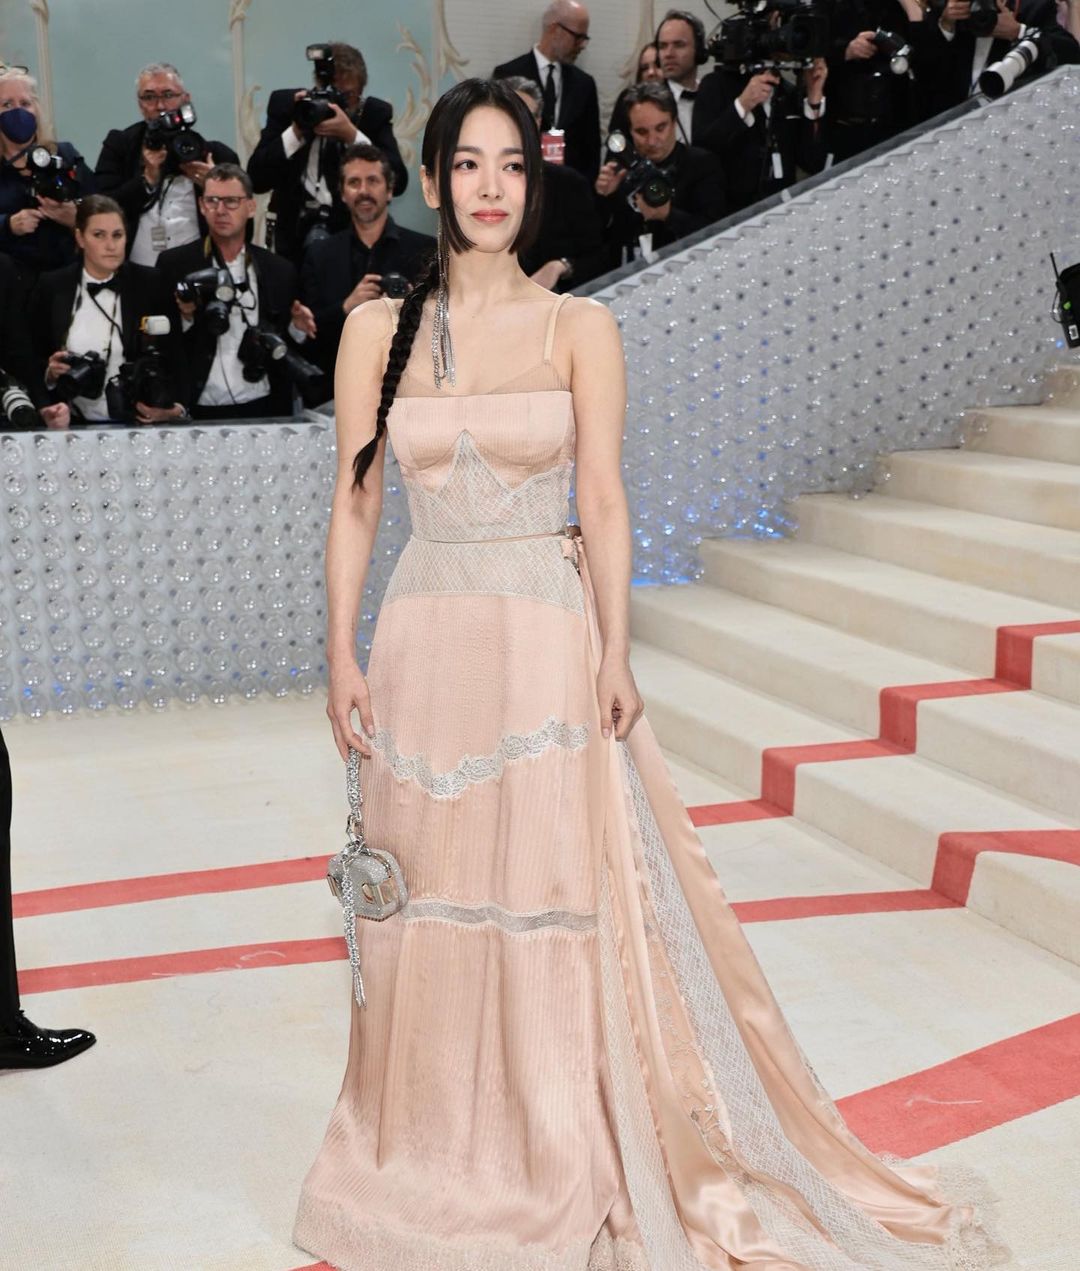 LOOK Song Hye Kyo Makes Her Met Gala Debut in a Fendi Dress Preview.ph